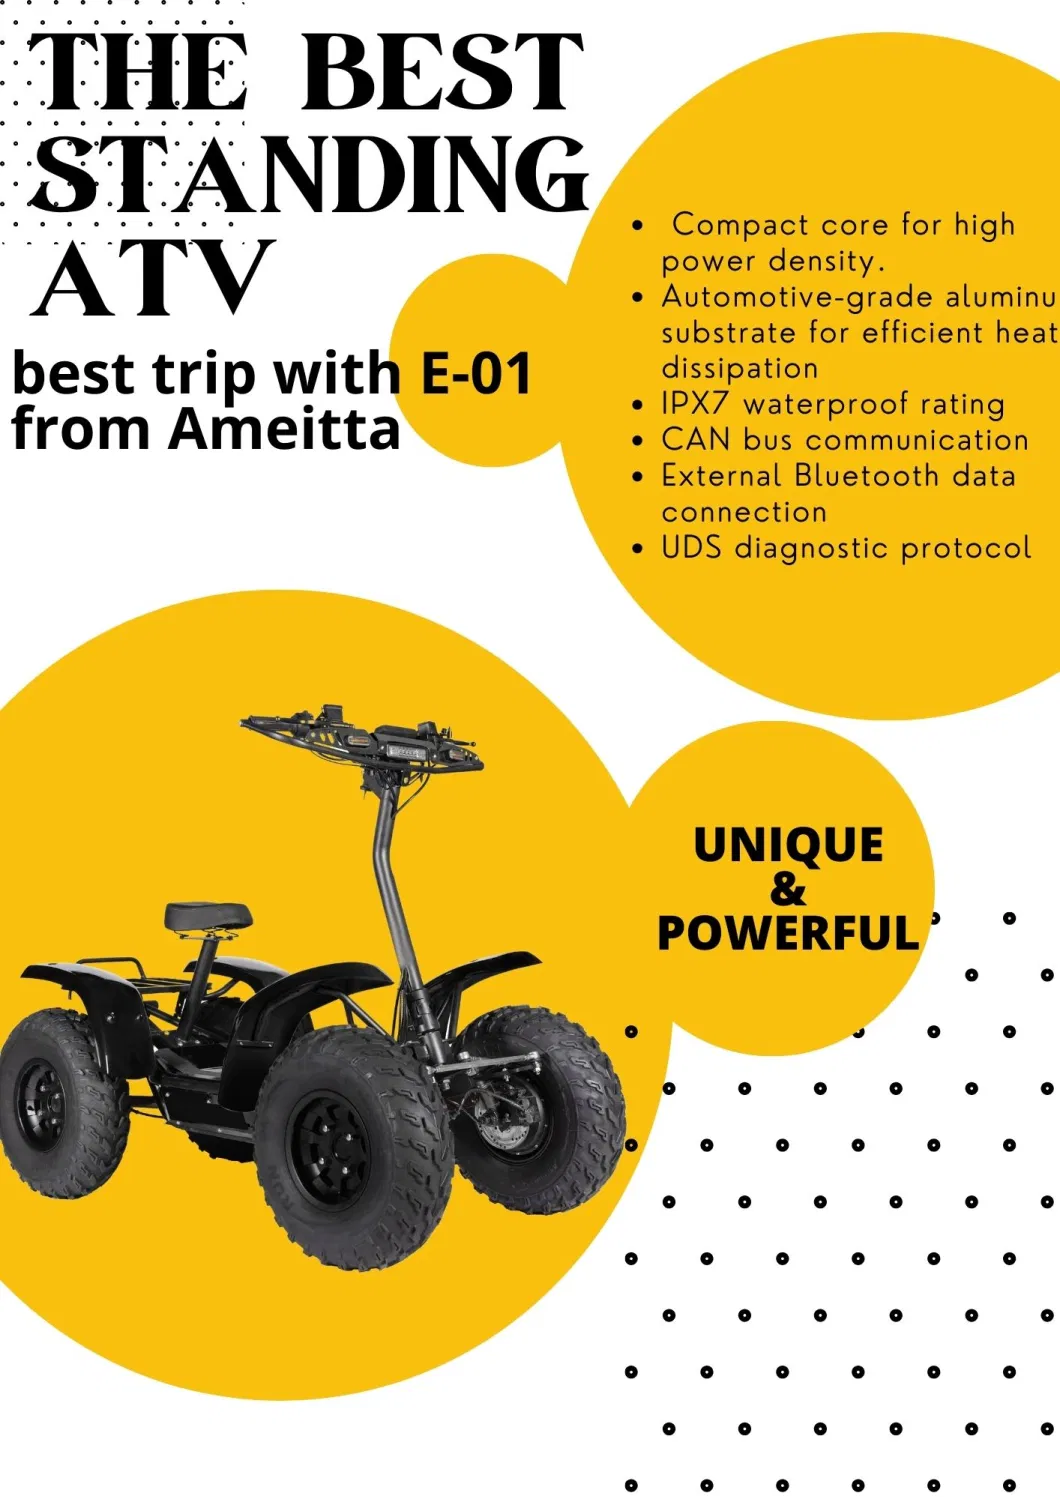 Standing ATV, Electric Scooter, Farm UTV, Battel Field ATV